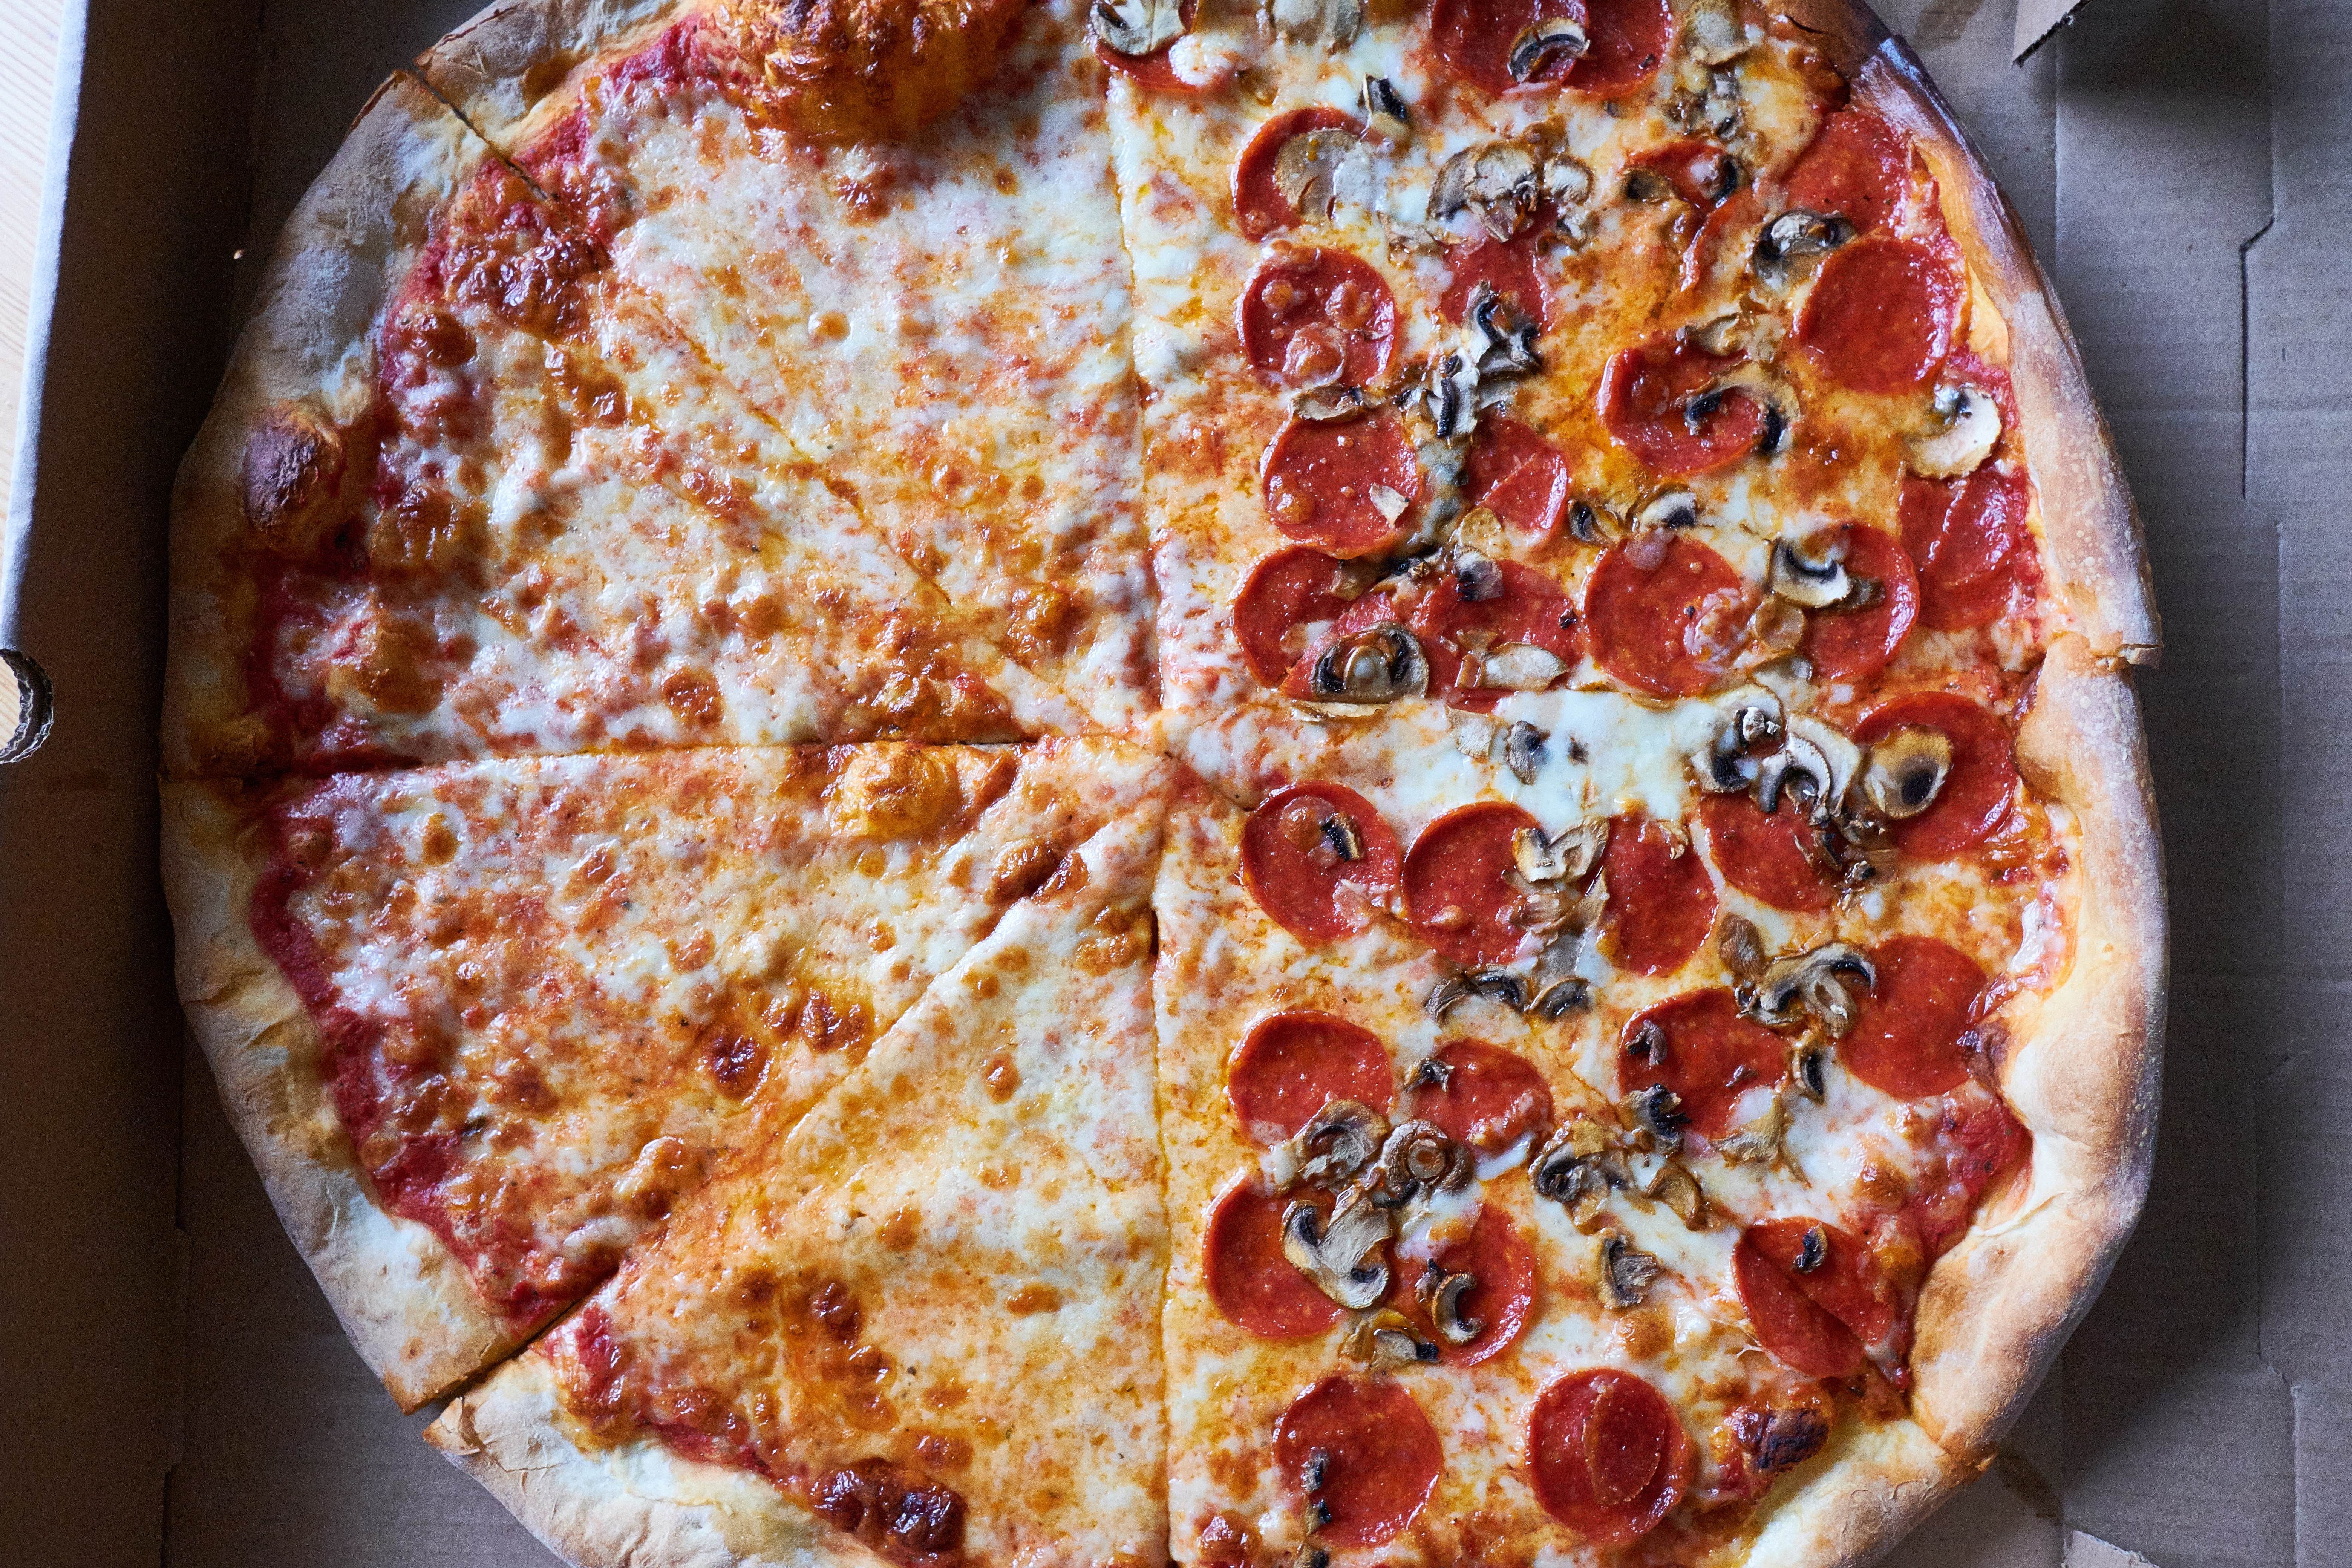 A whole pizza, half cheese, half pepperoni and mushroom.